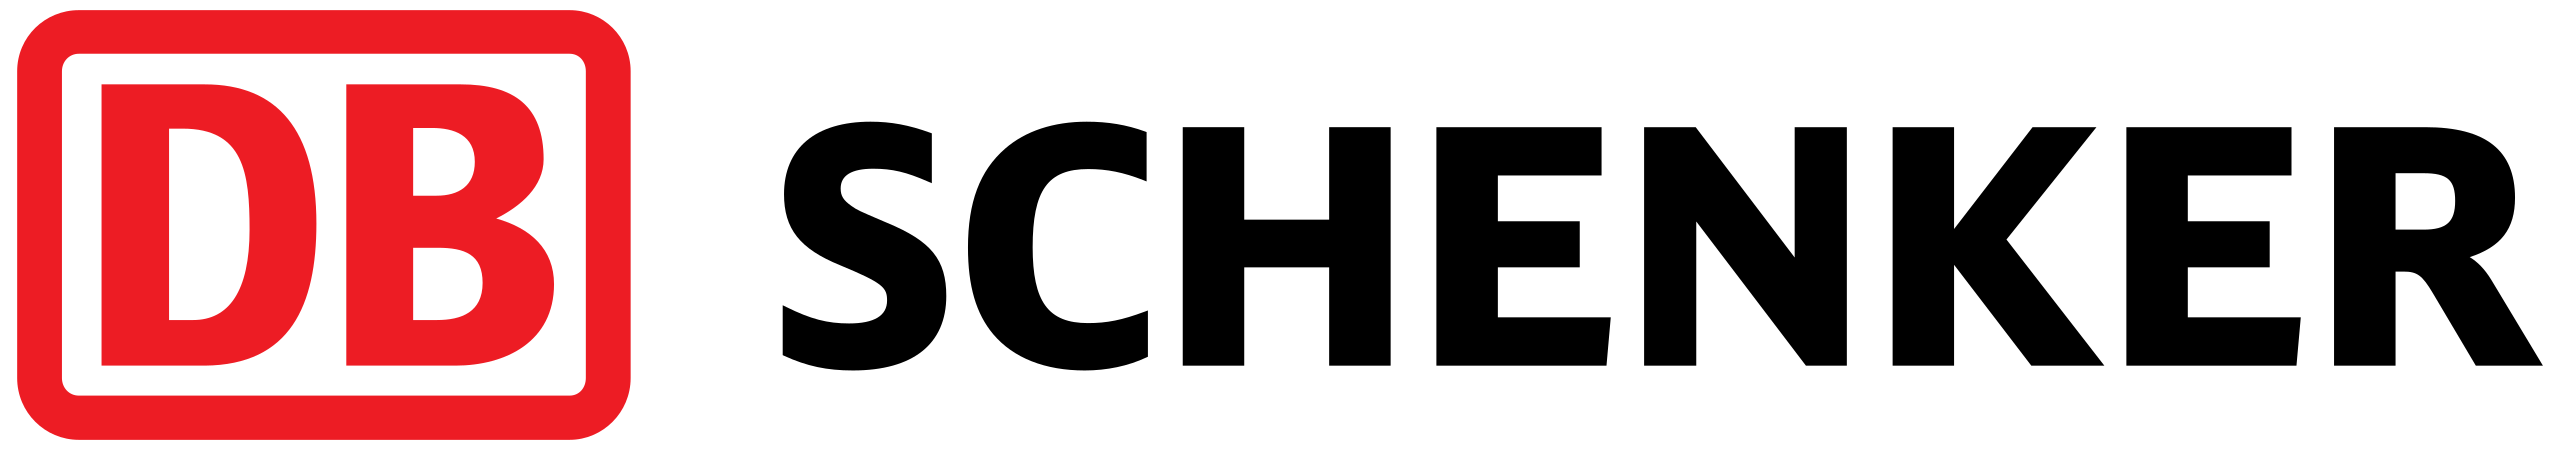 DB_Schenker_logo.png